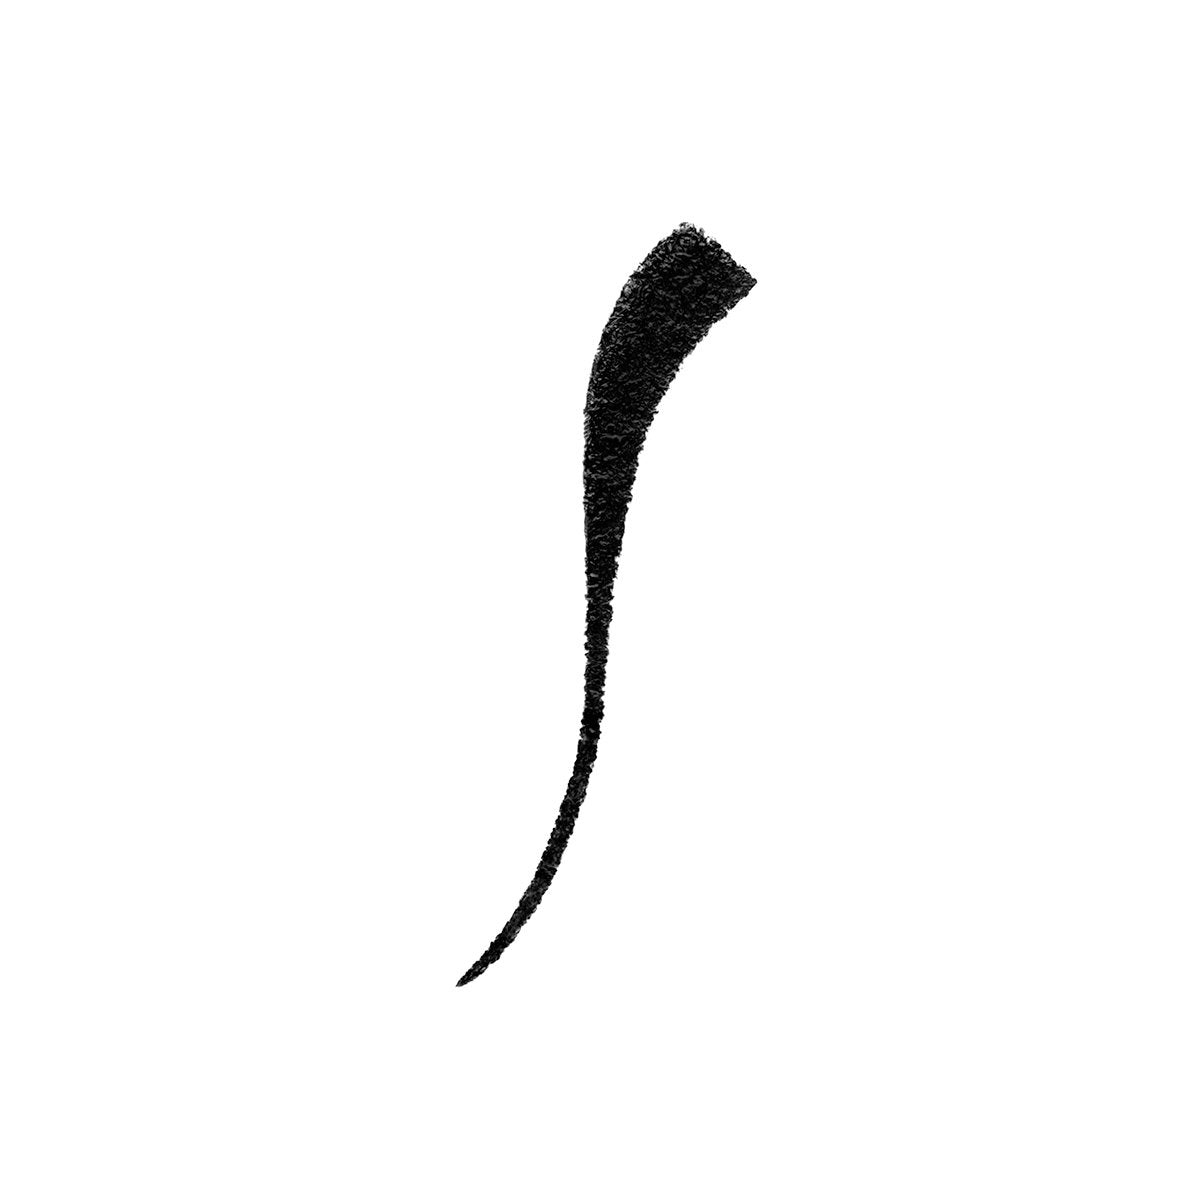 CHAT NOIR - INKY BLACK - inky black liquid eyeliner with precise brush tip